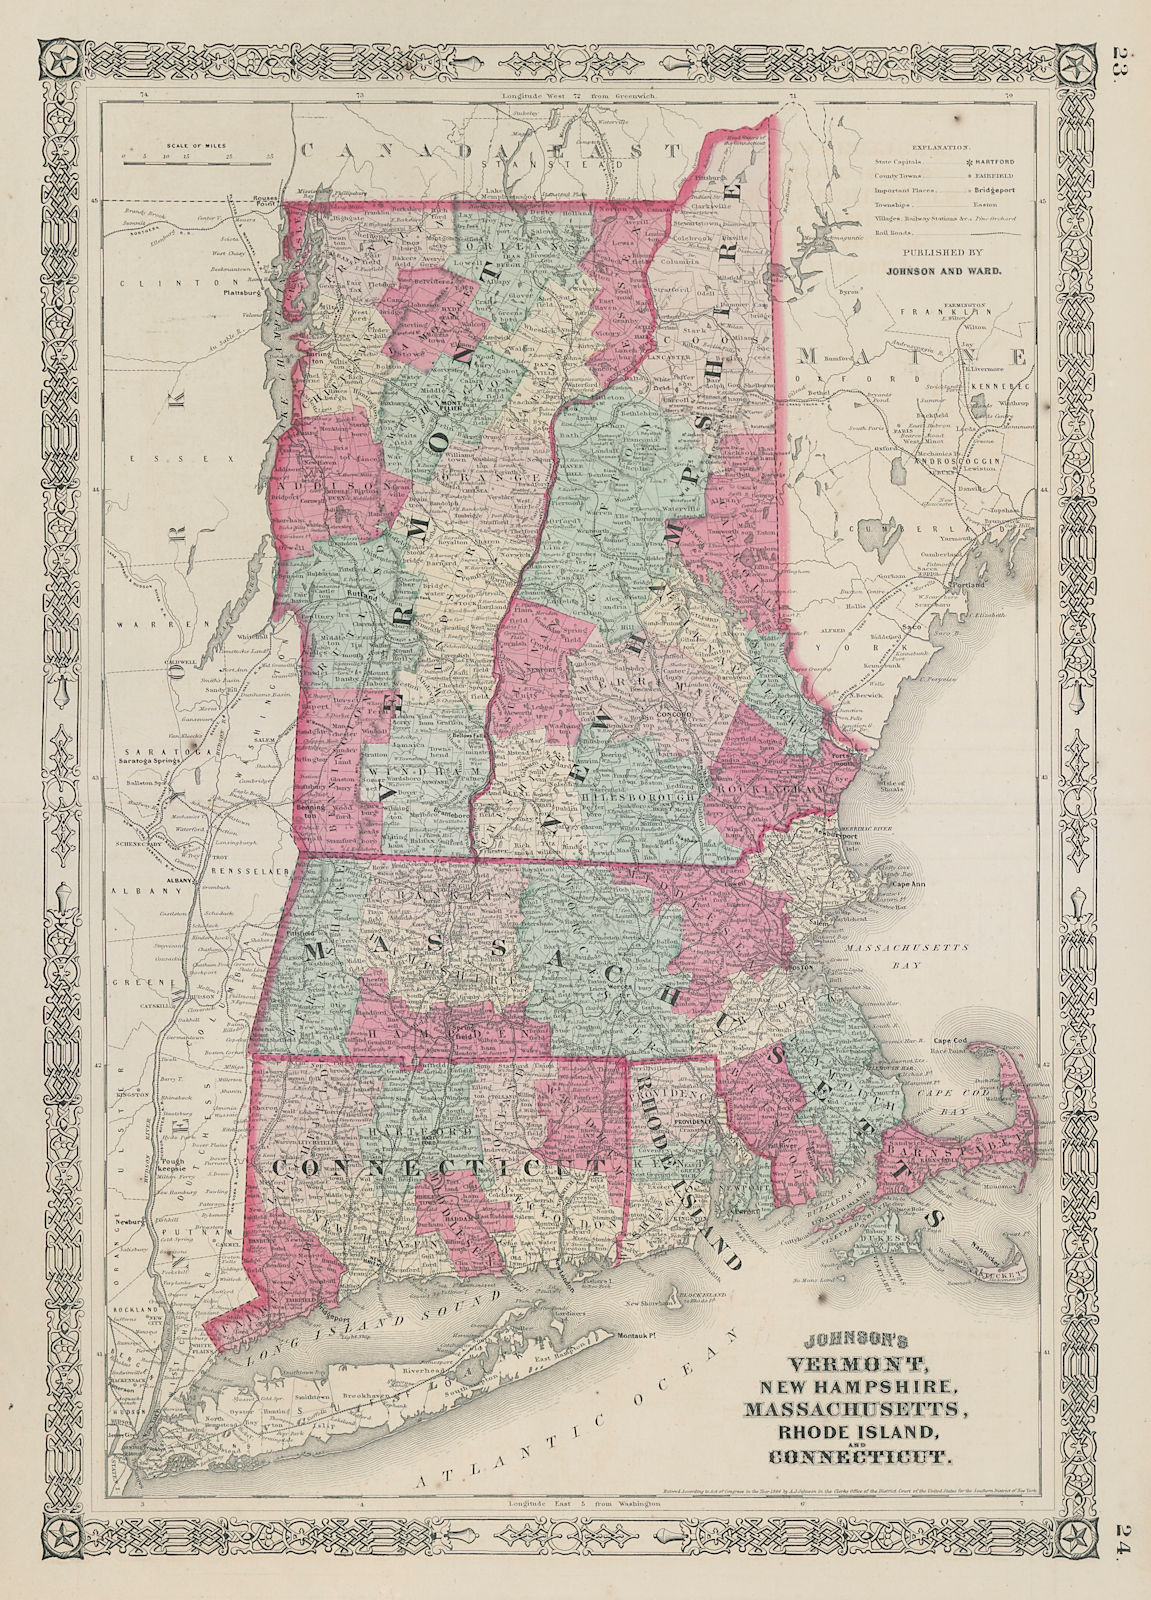 Associate Product Johnson's Vermont New Hampshire Massachusetts Rhode Island Connecticut 1865 map